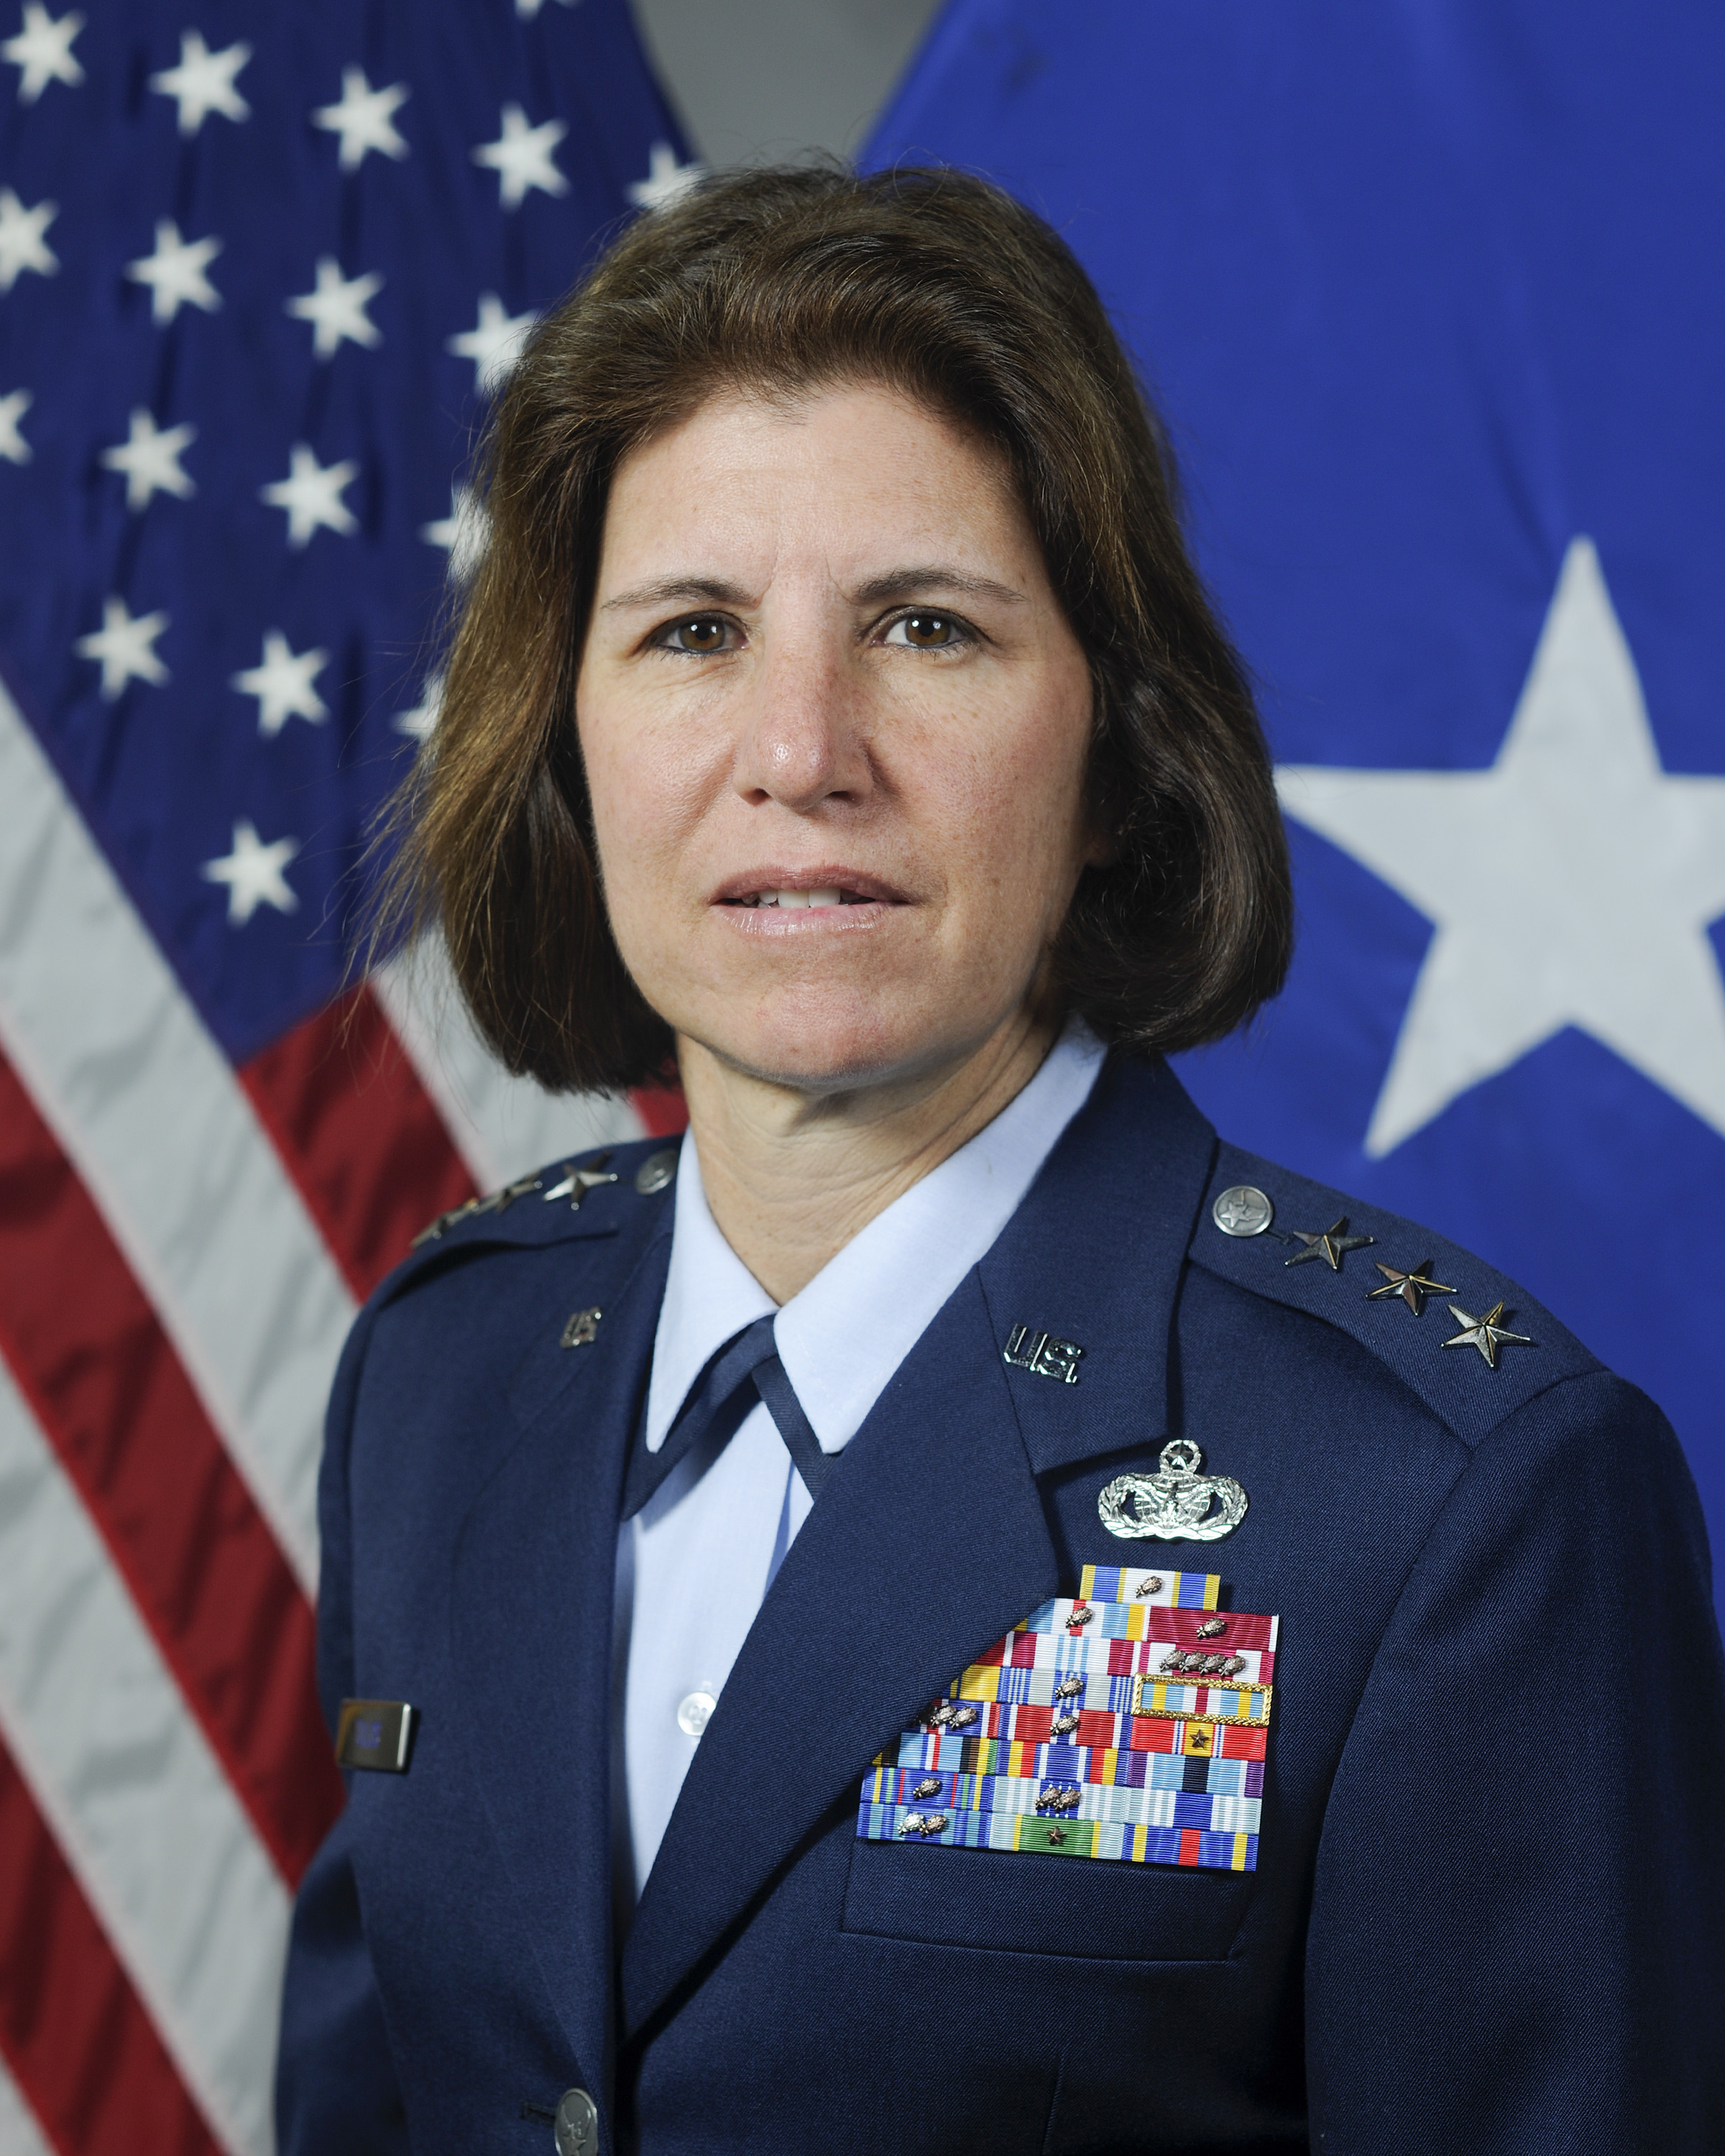 Air University Commander and President, Lt. Gen. Andrea D. Tullos